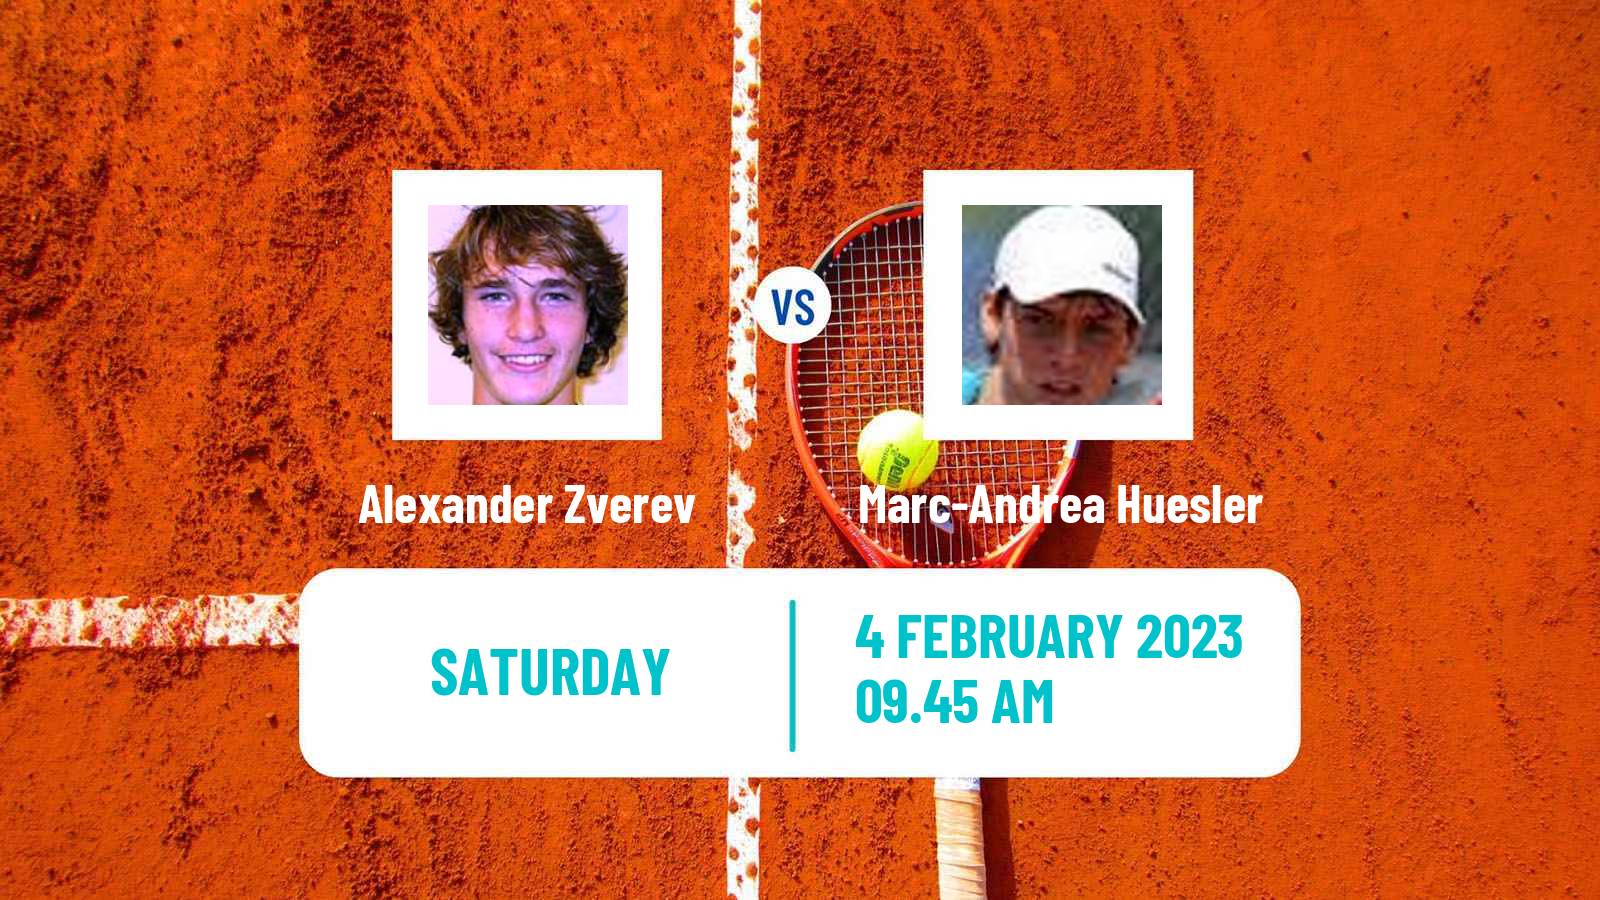 Tennis Davis Cup World Group Alexander Zverev - Marc-Andrea Huesler